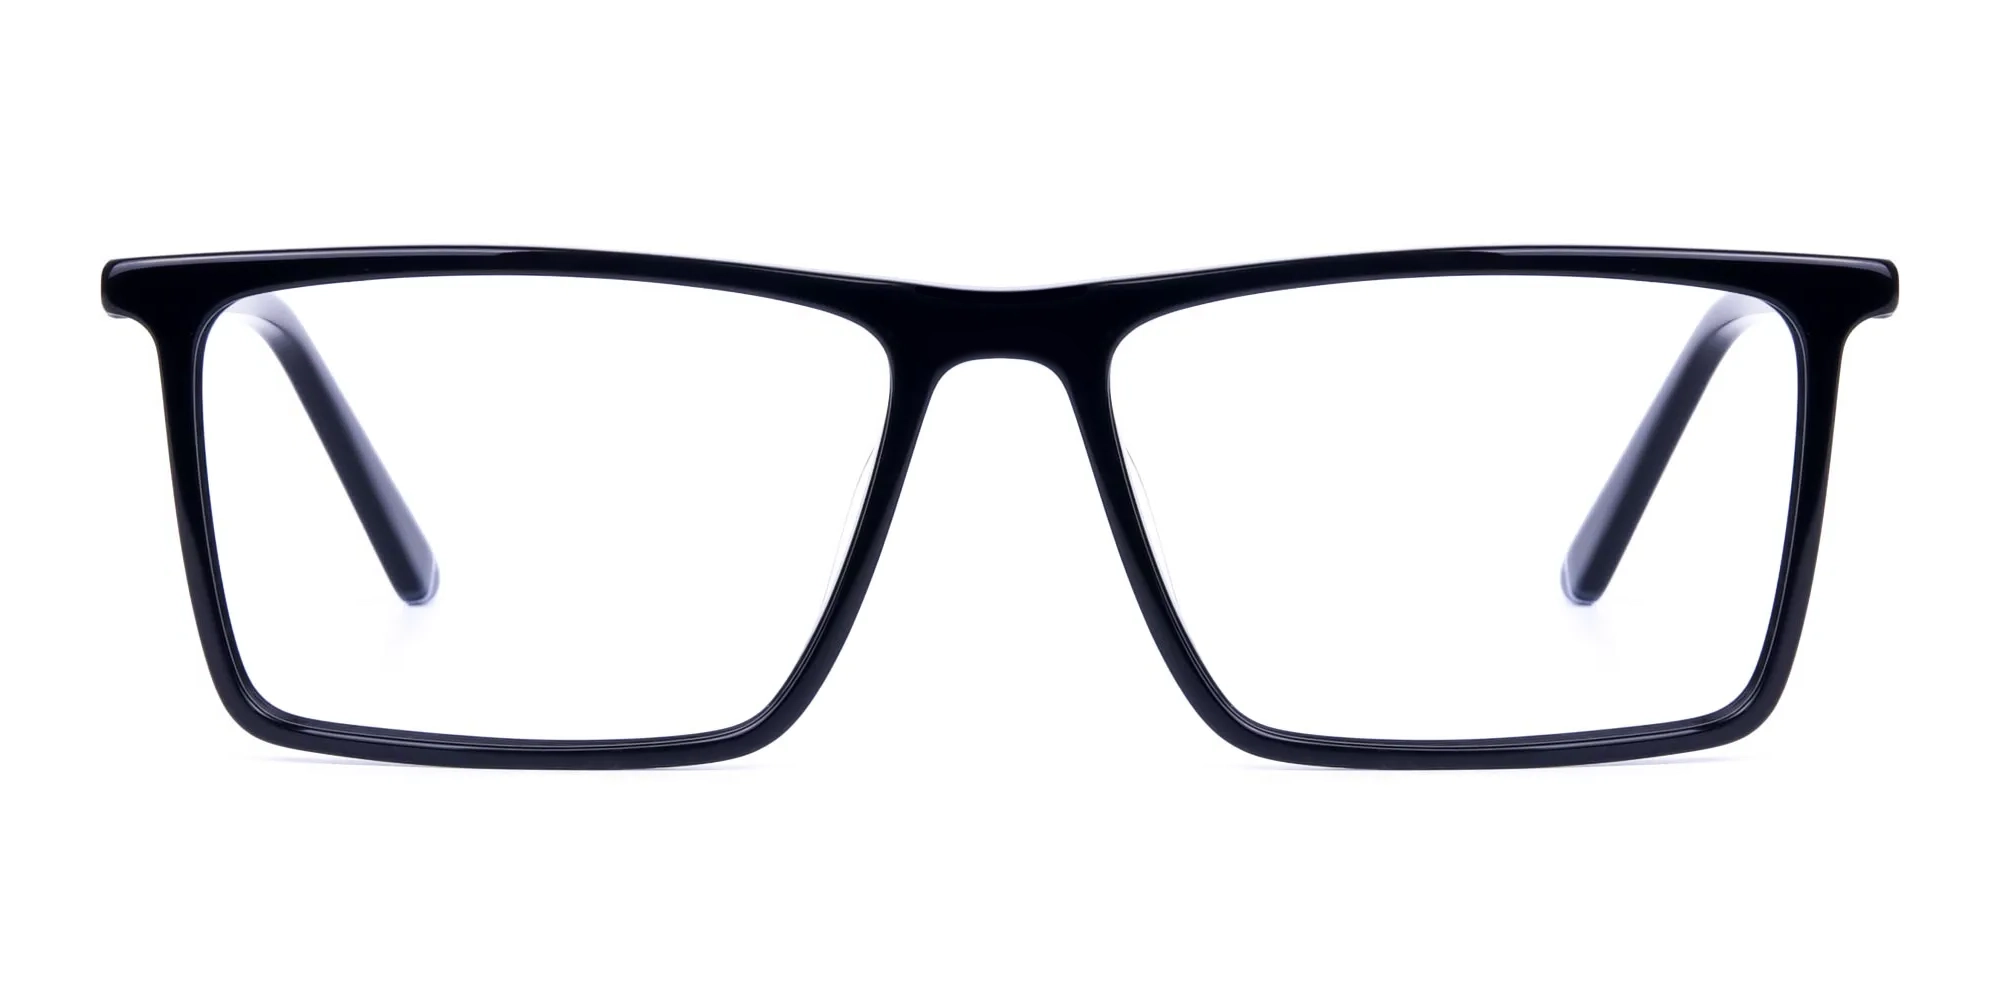 Fashionable-Black-Full-Rim-Rectangular-Glasses-2